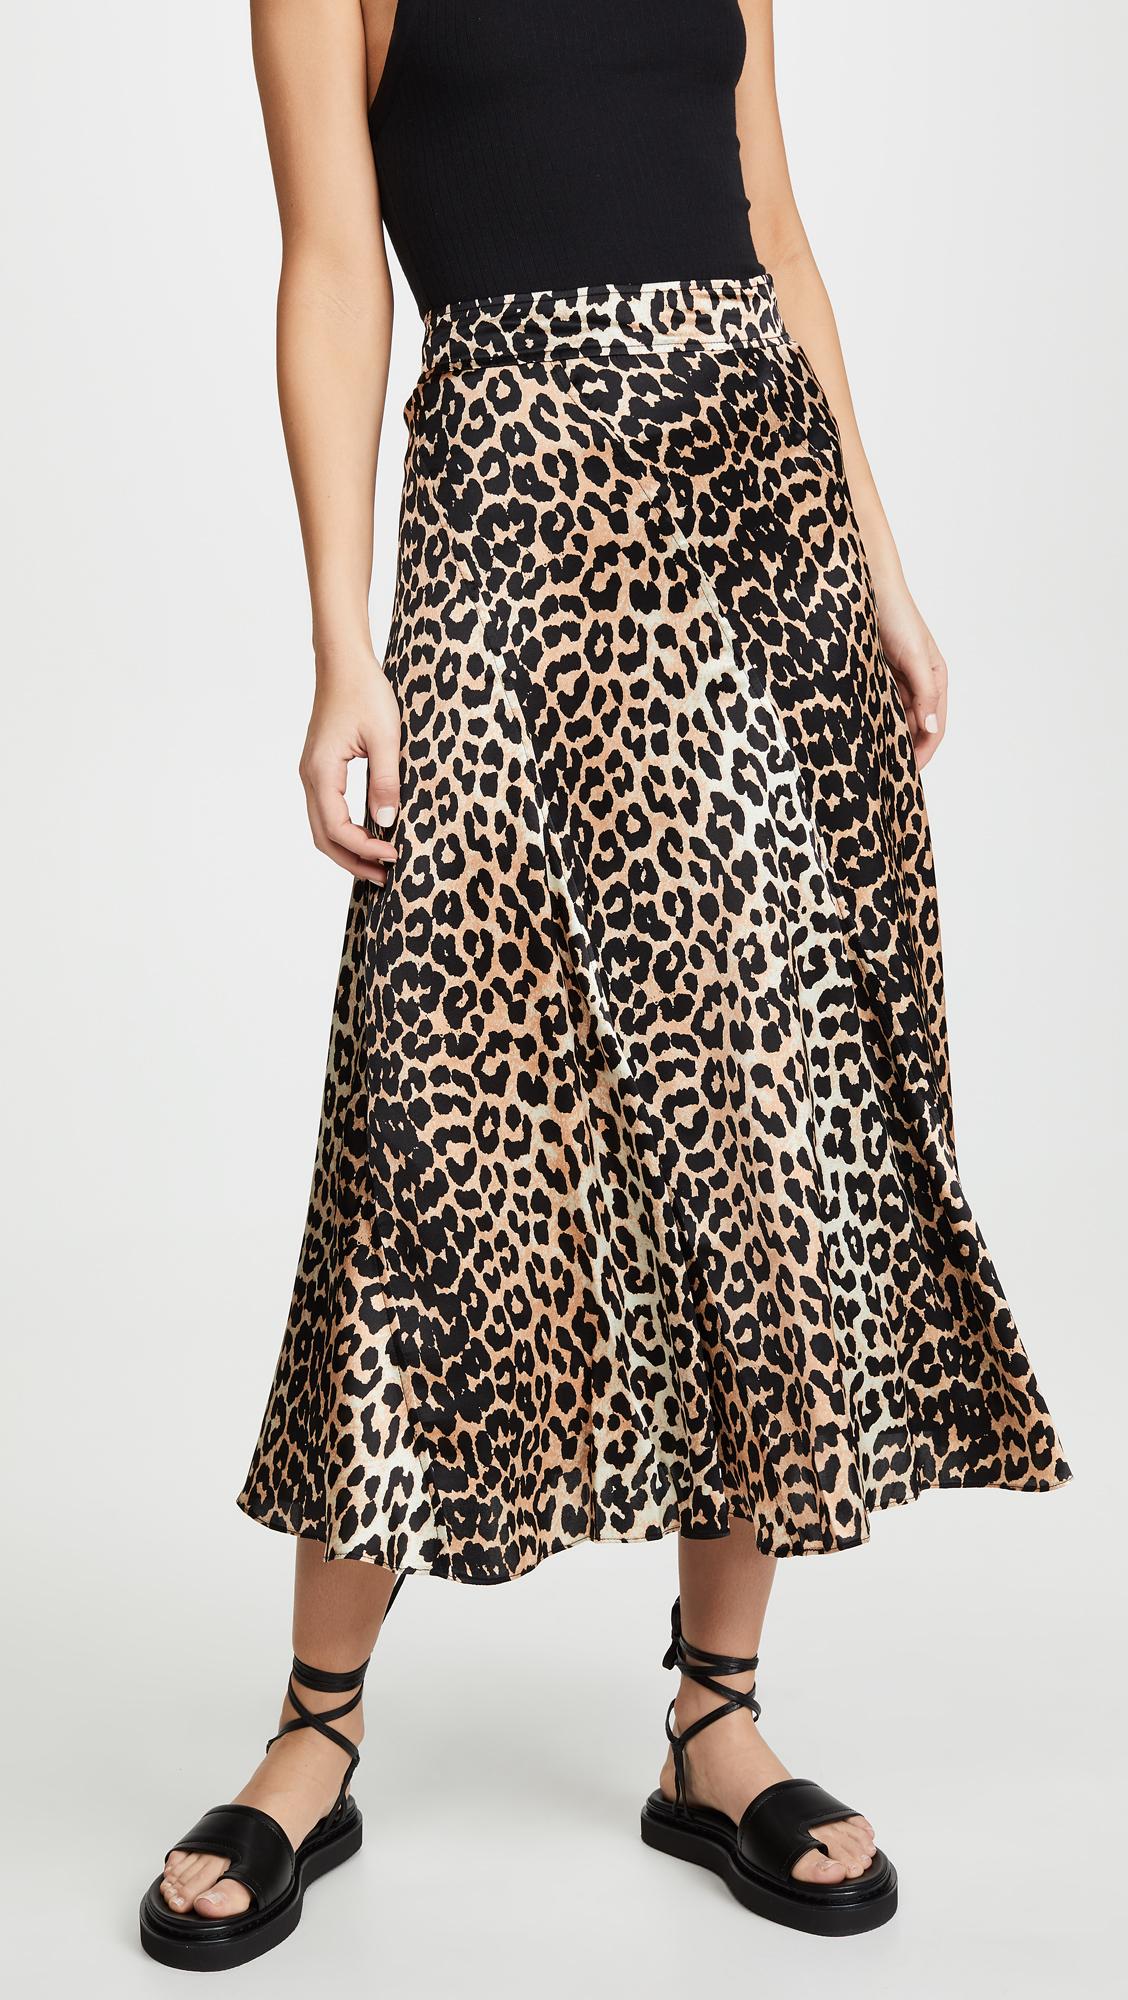 Ganni Silk Stretch Skirt in Leopard (Black) - Lyst